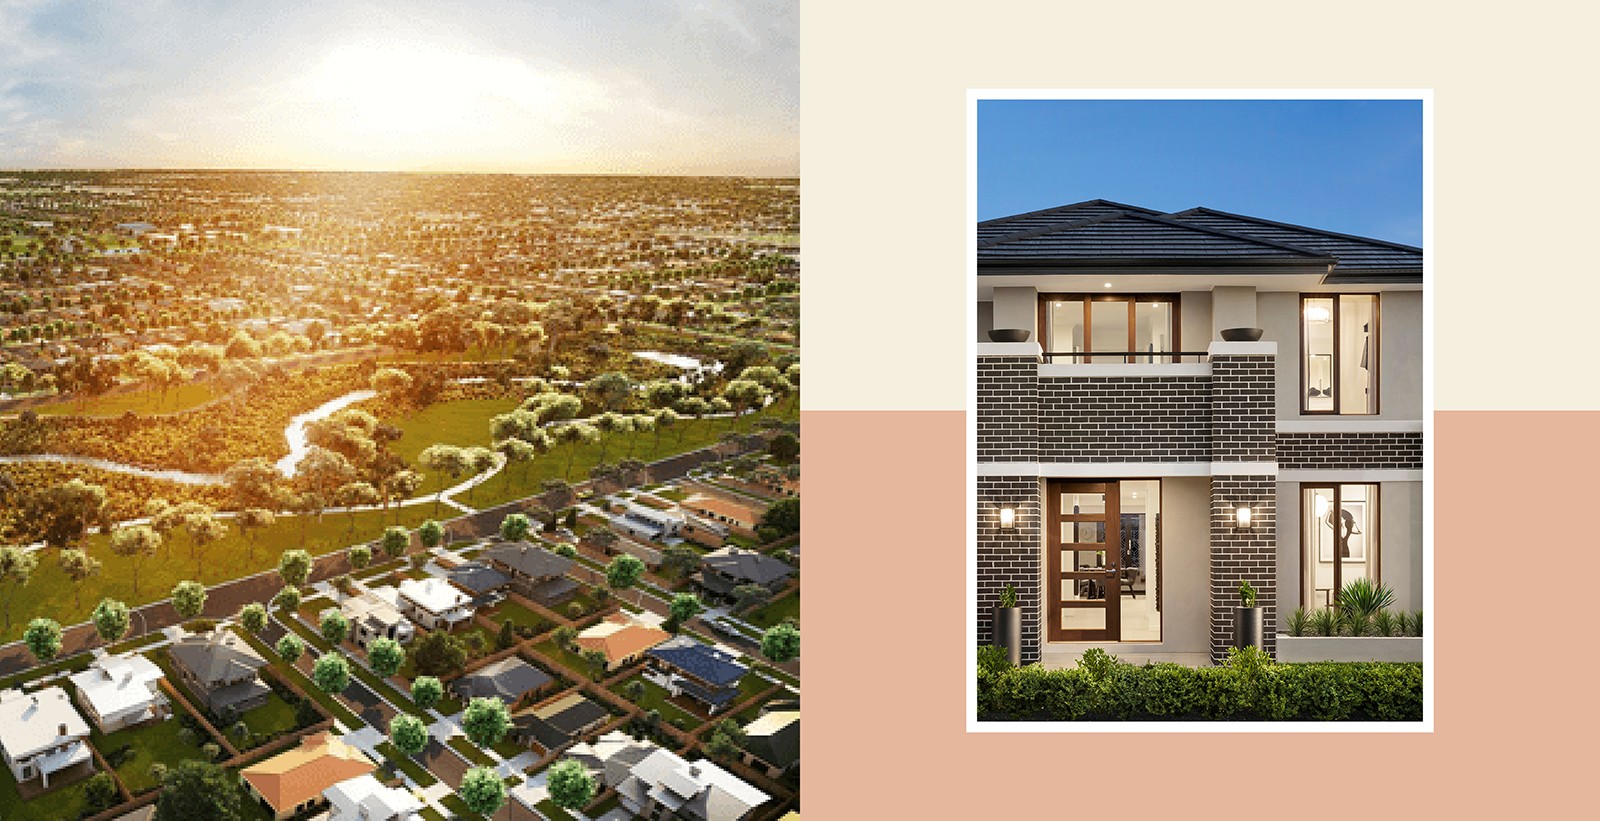 Want-the-Best-Think-Melbournes-West-carlisle-homes-HERO-1500x770-v4__Resampled.jpg